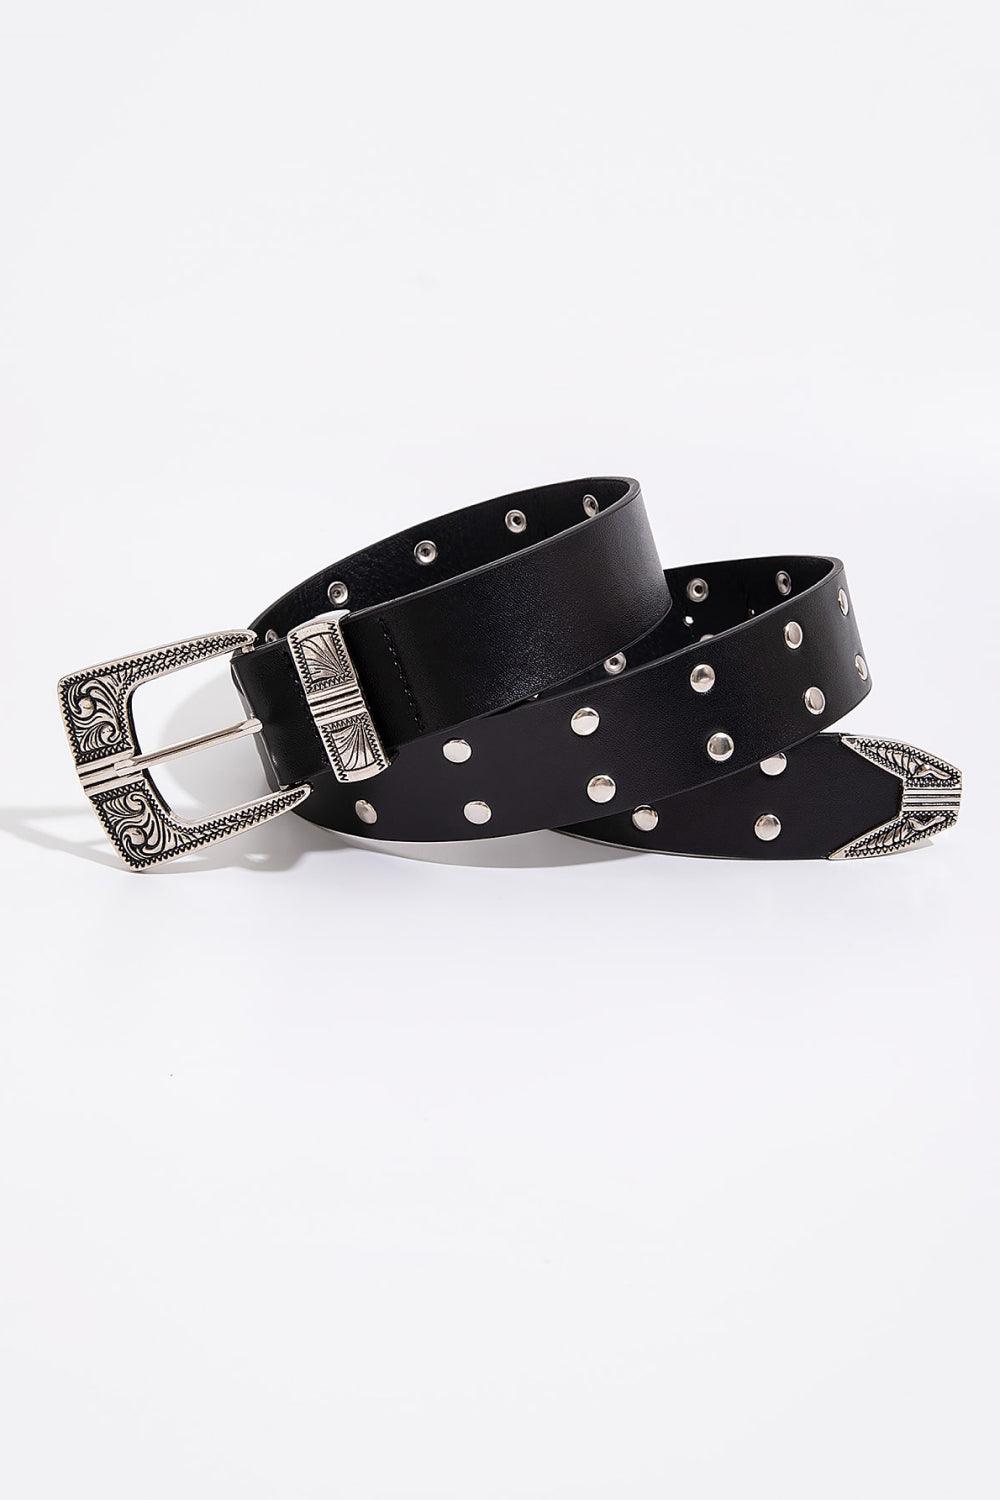 Fashion-Forward Double Row Black Studded Leather Belt - MXSTUDIO.COM